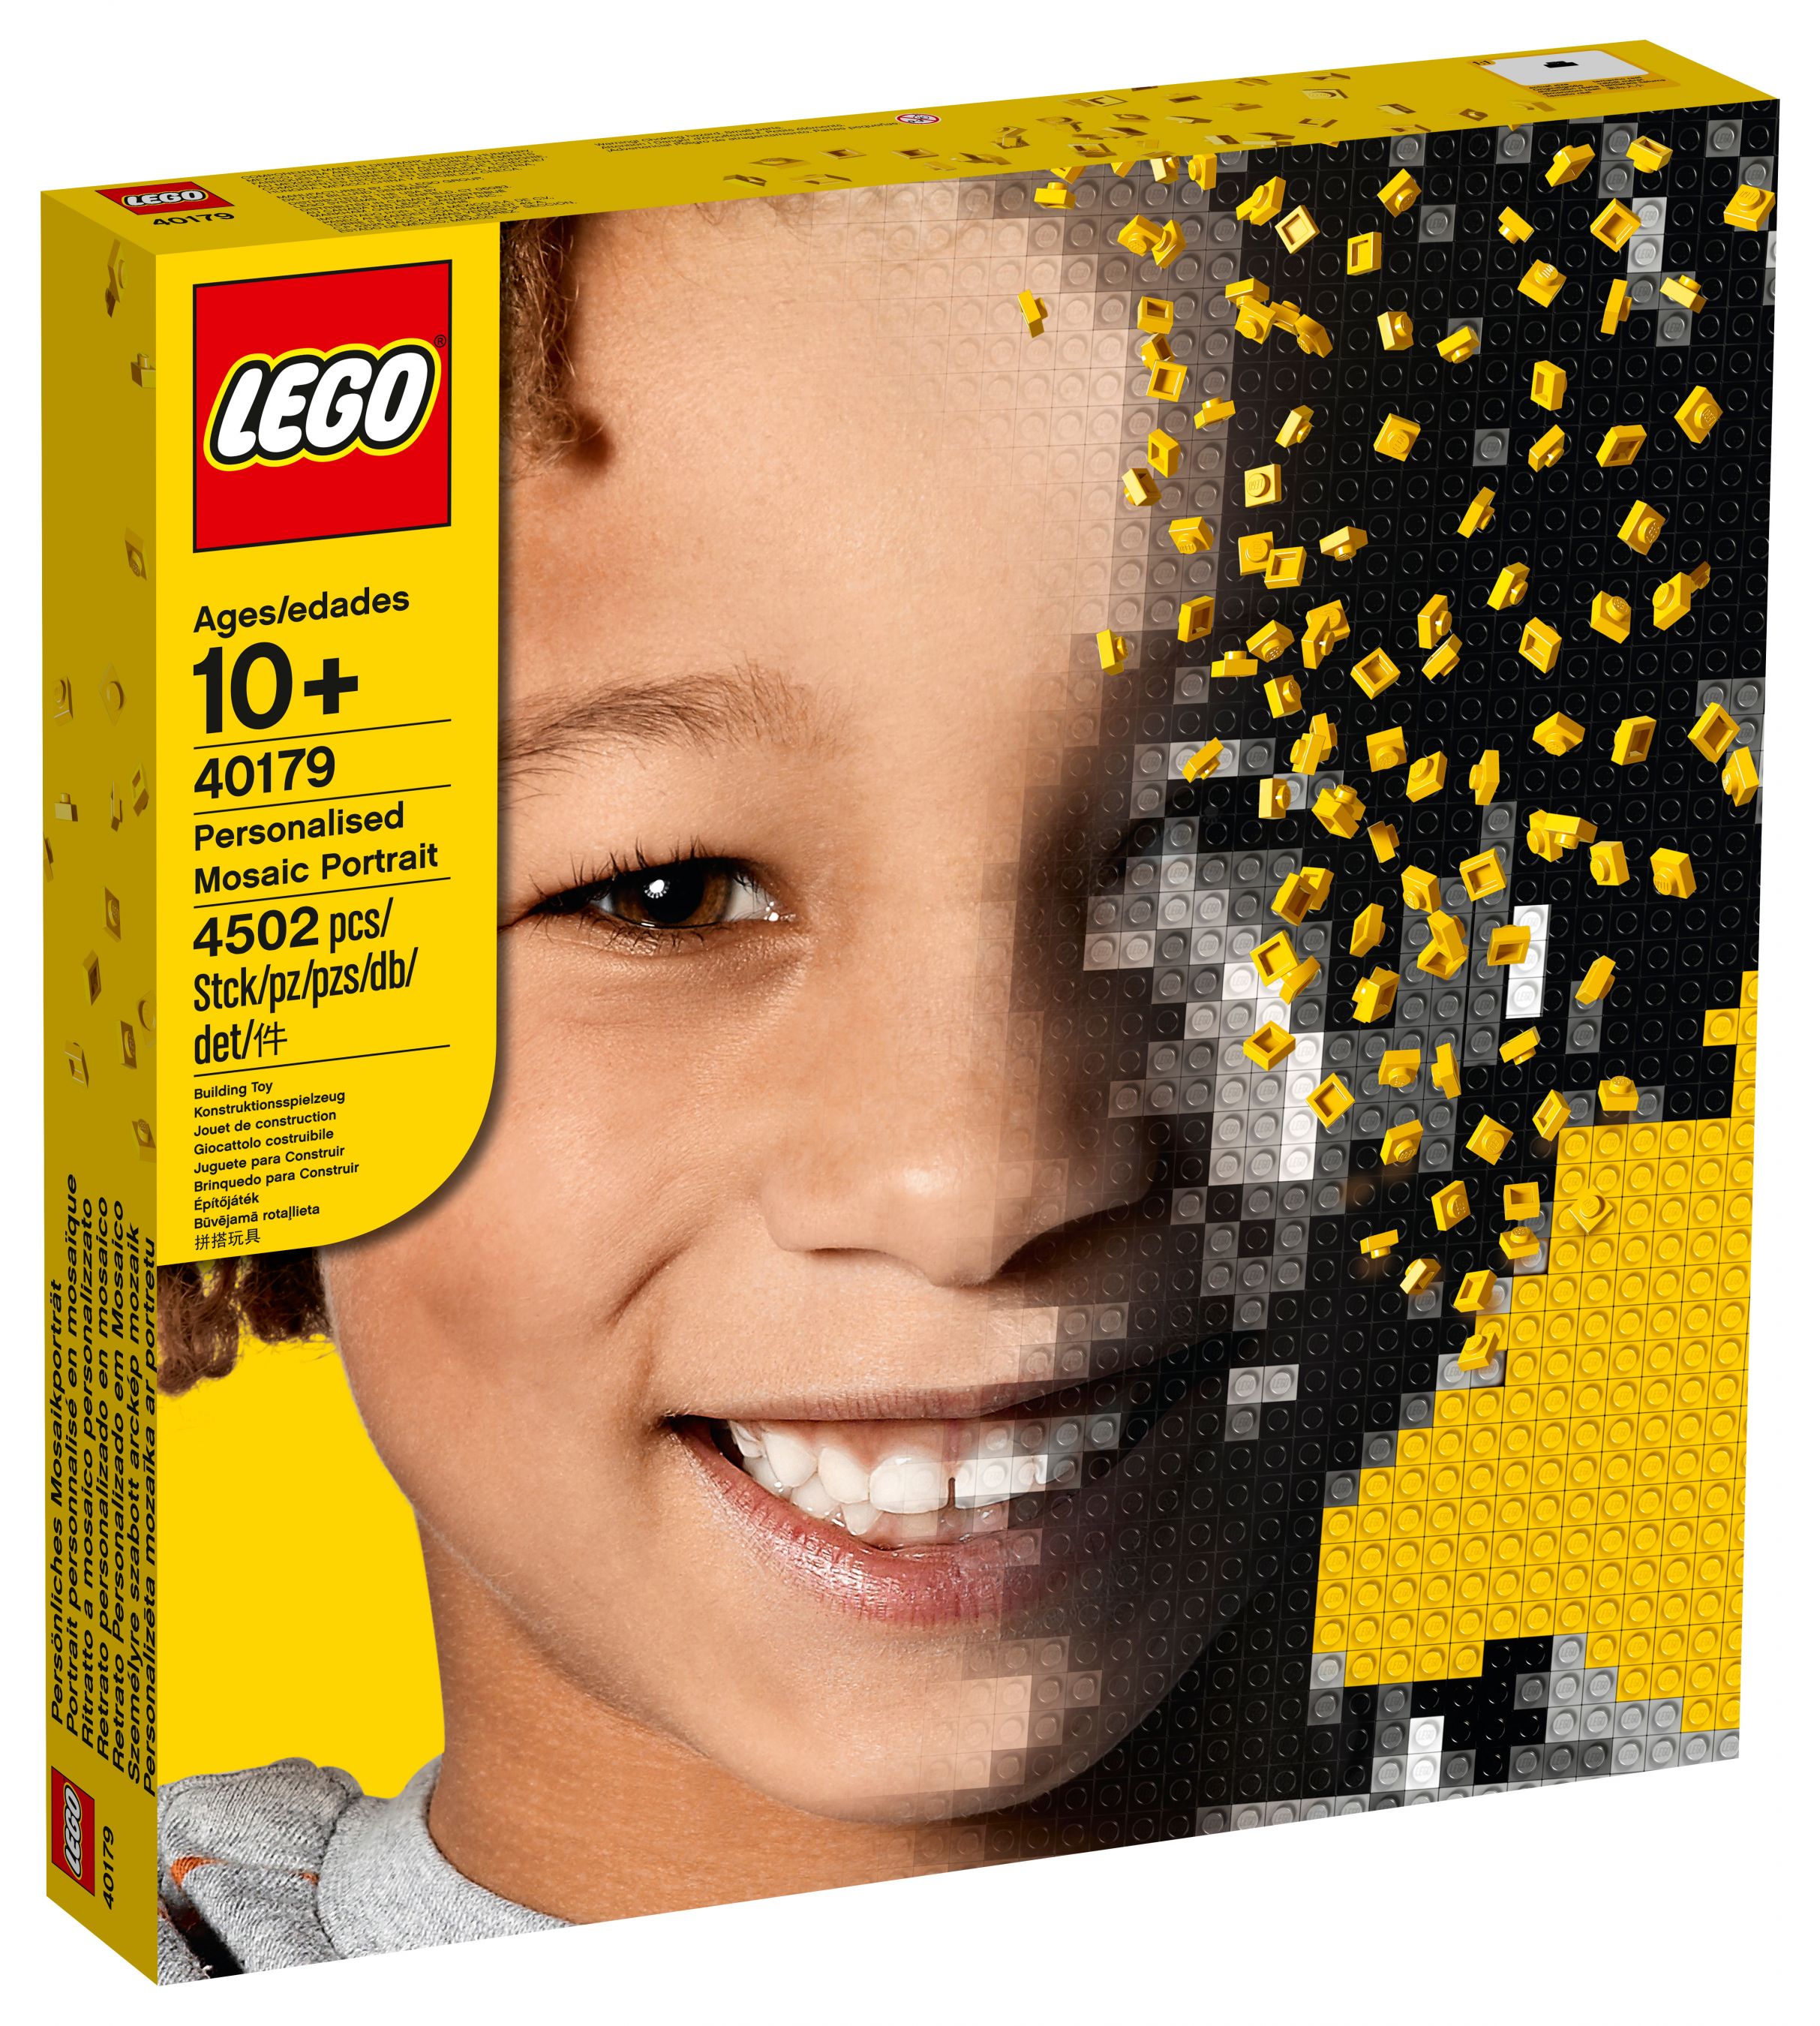 LEGO Miscellaneous 40179 Personalised Mosaic Portrait LEGO_40179.jpg